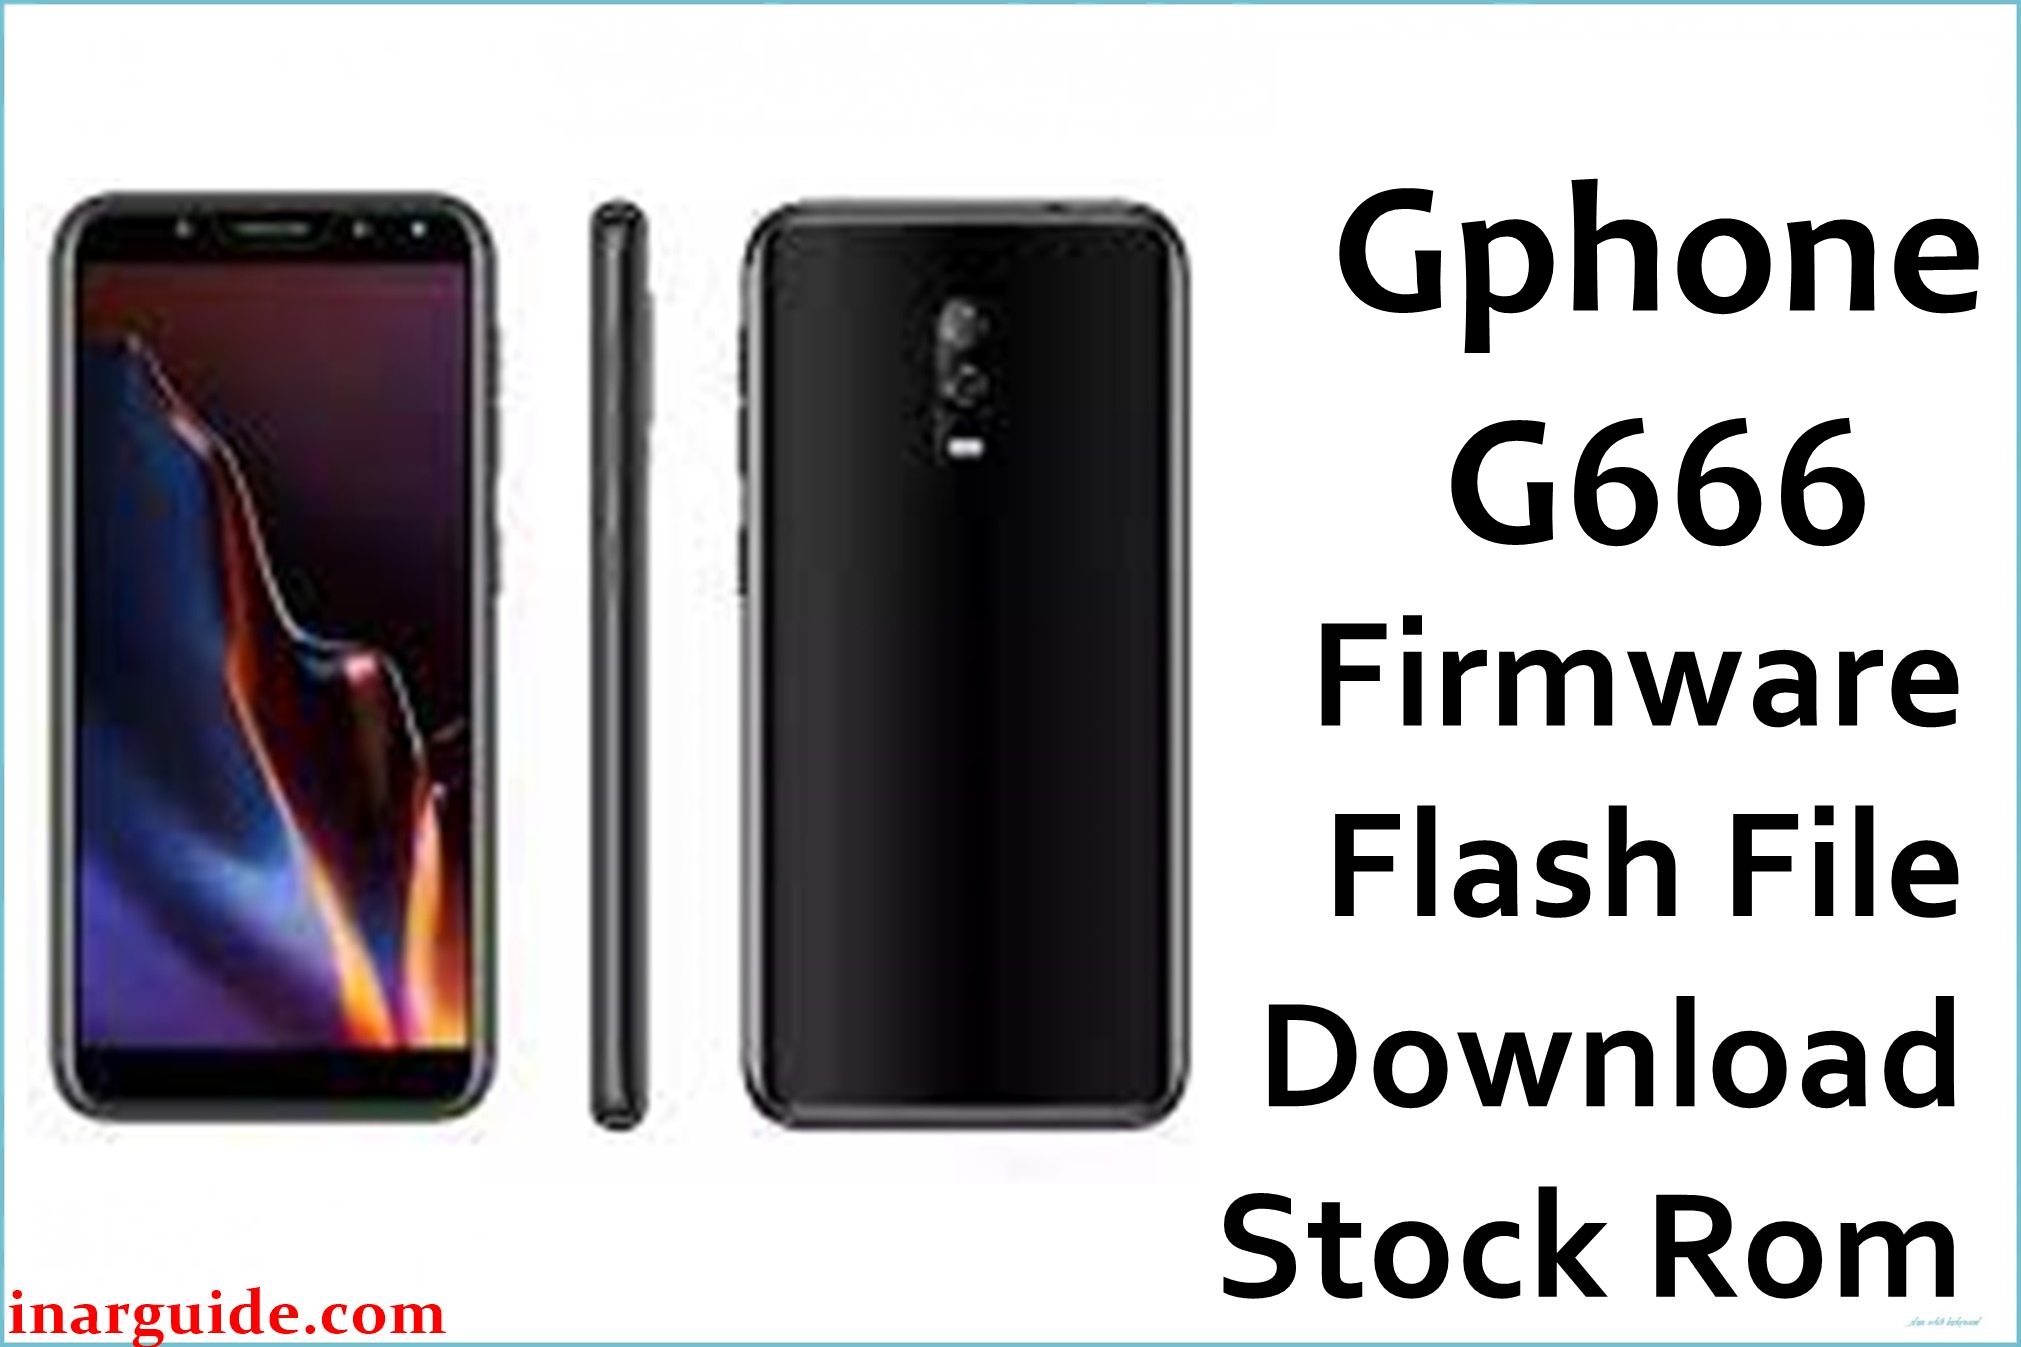 Gphone G666